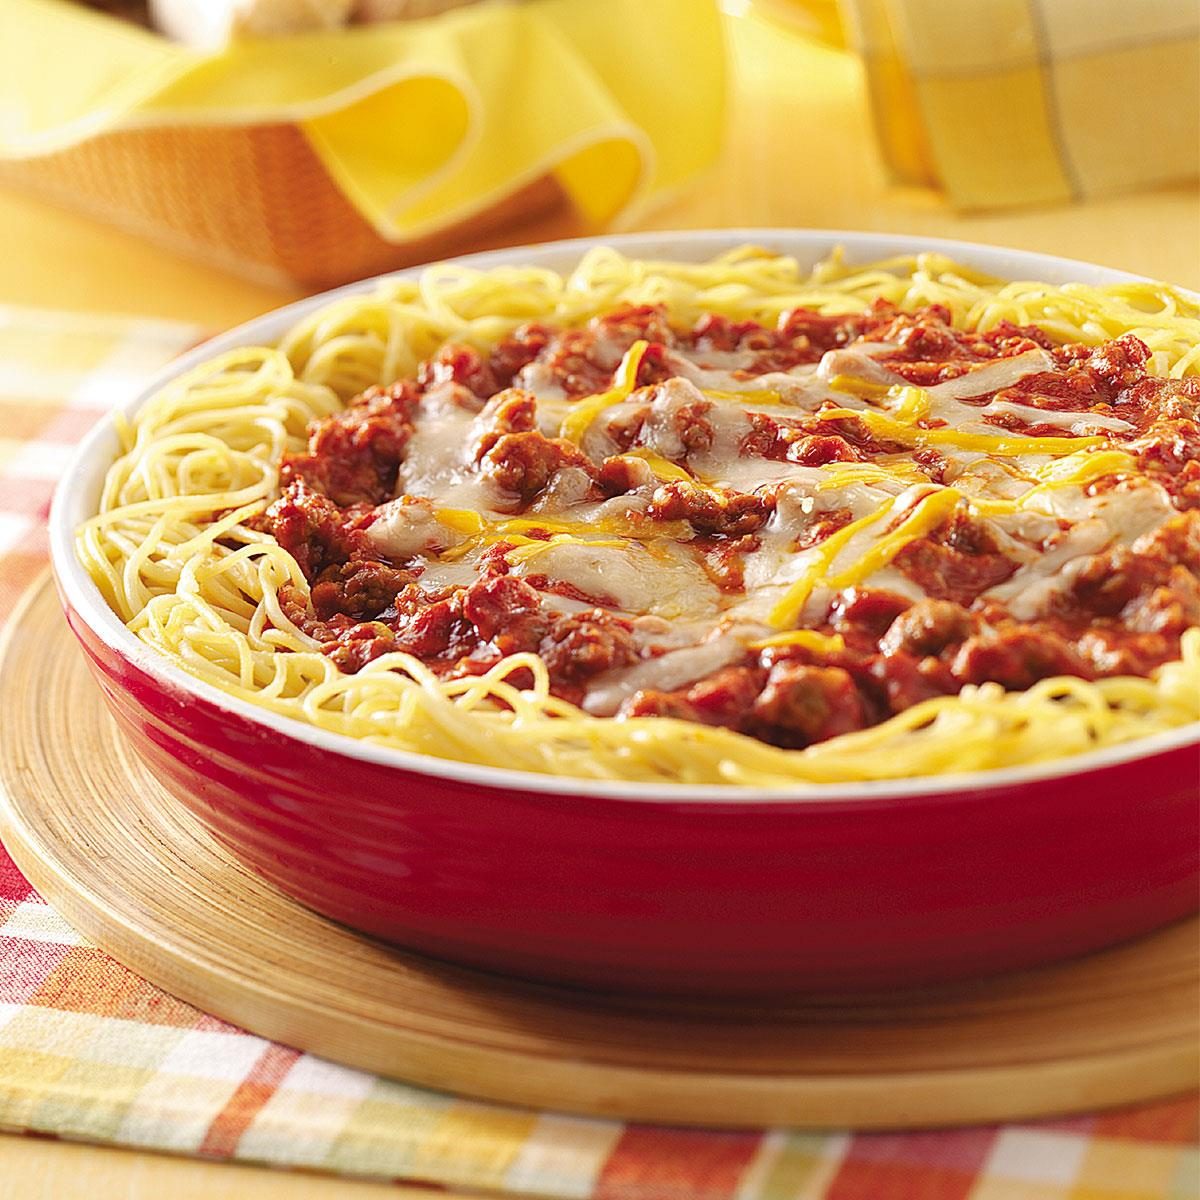 What is a good spaghetti pie recipe?